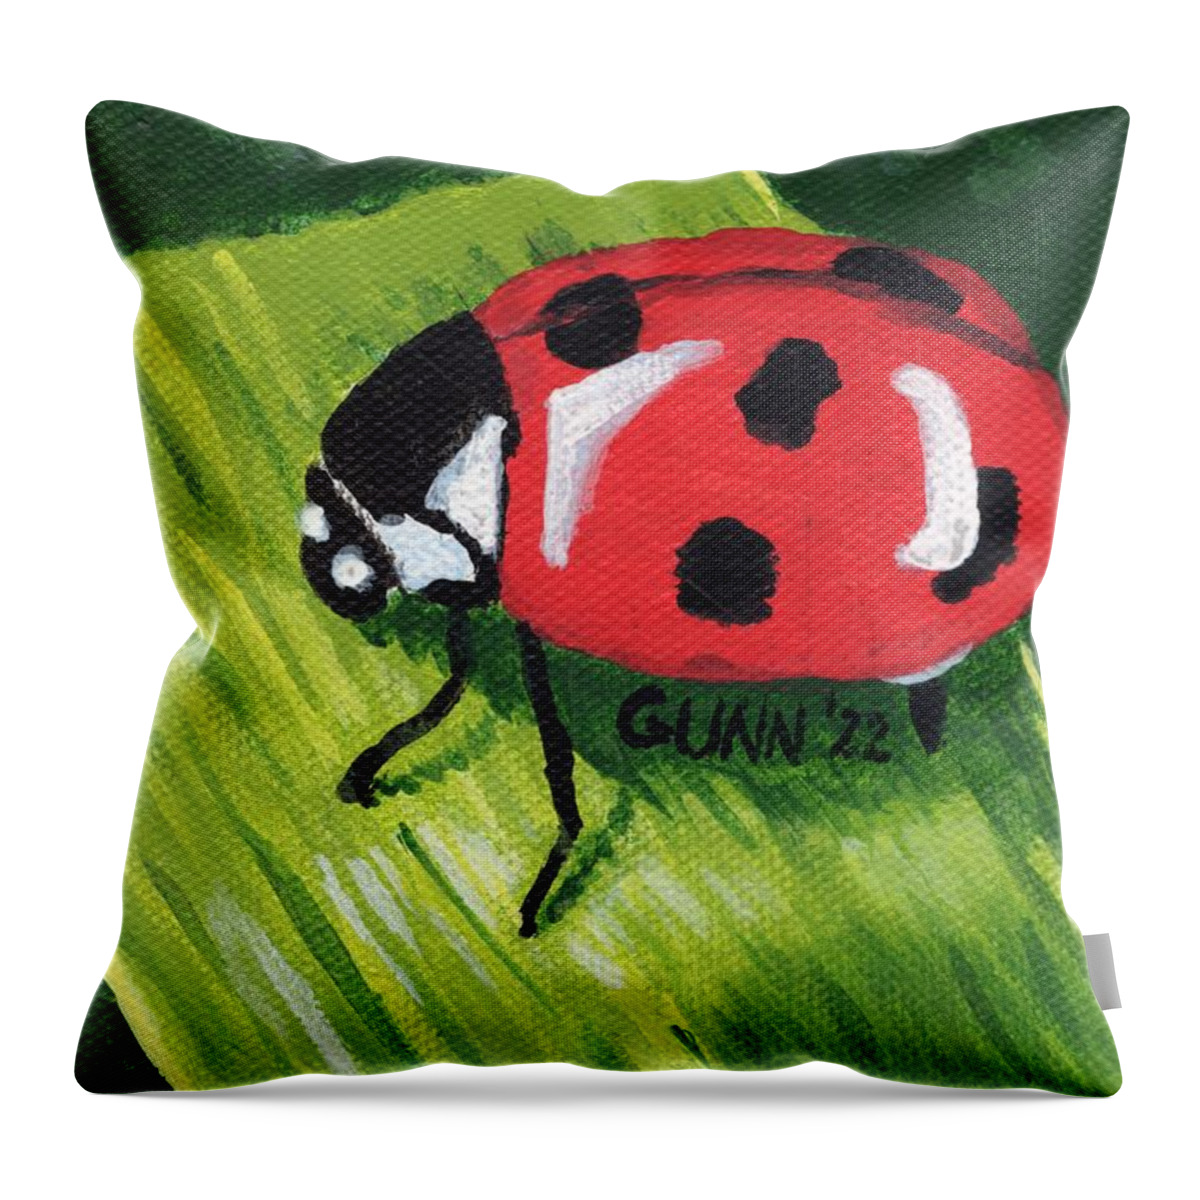 Ladybug Throw Pillow featuring the painting Ladybug by Katrina Gunn